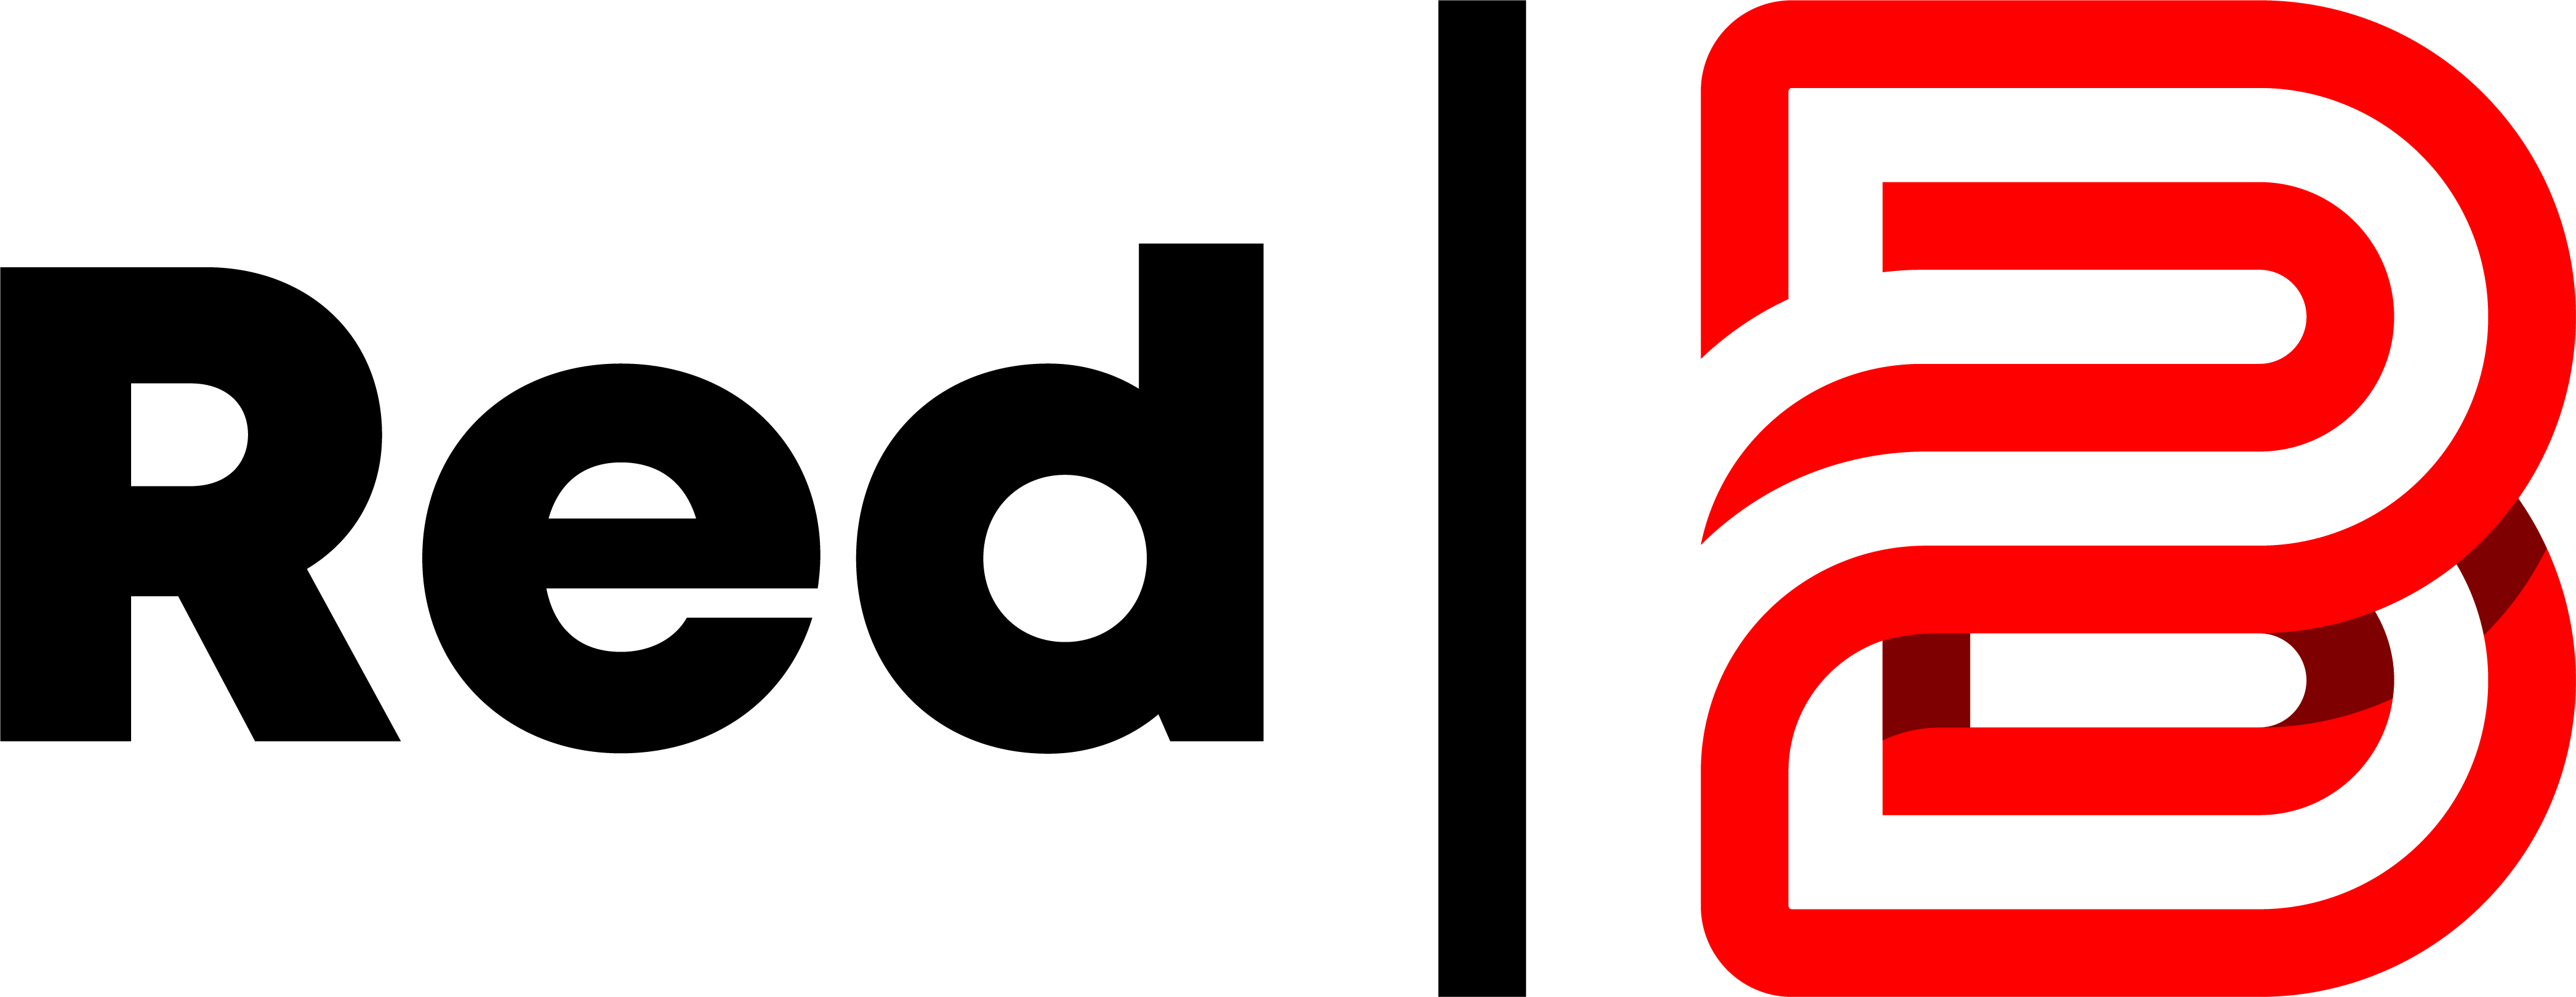 RedB 写真データ納品システム